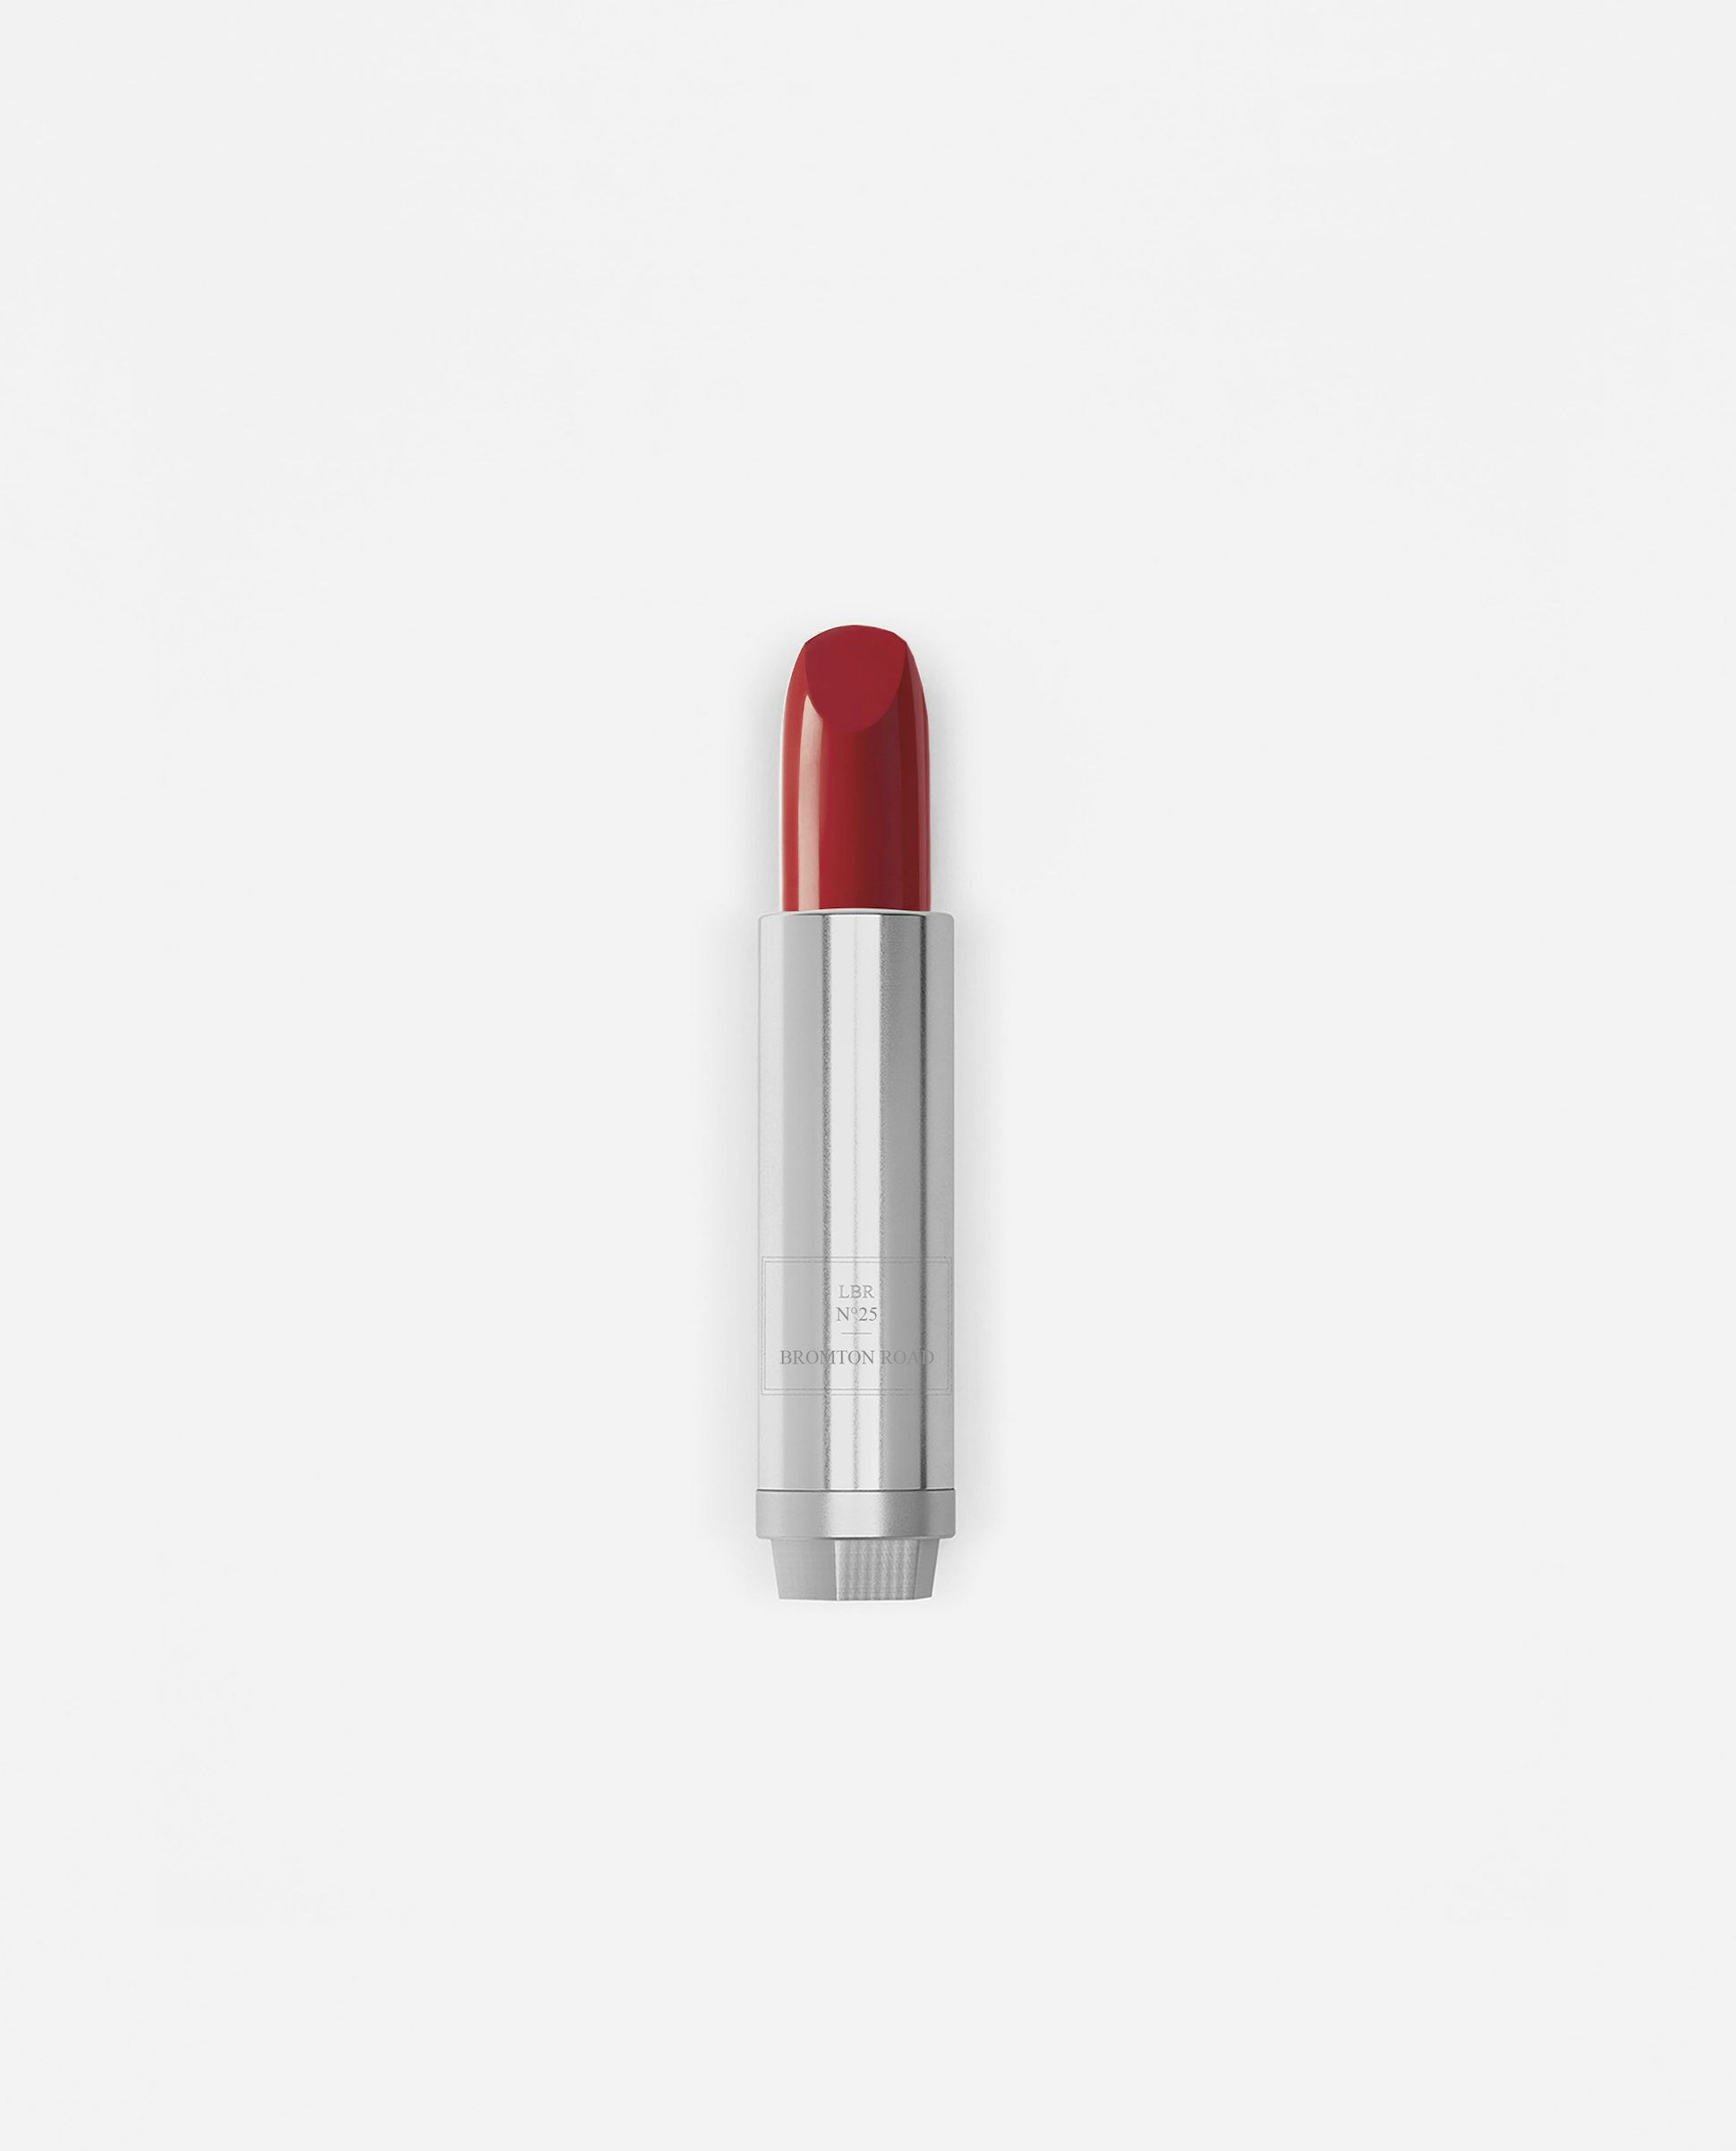 La bouche rouge Brompton Road lipstick in metal refill